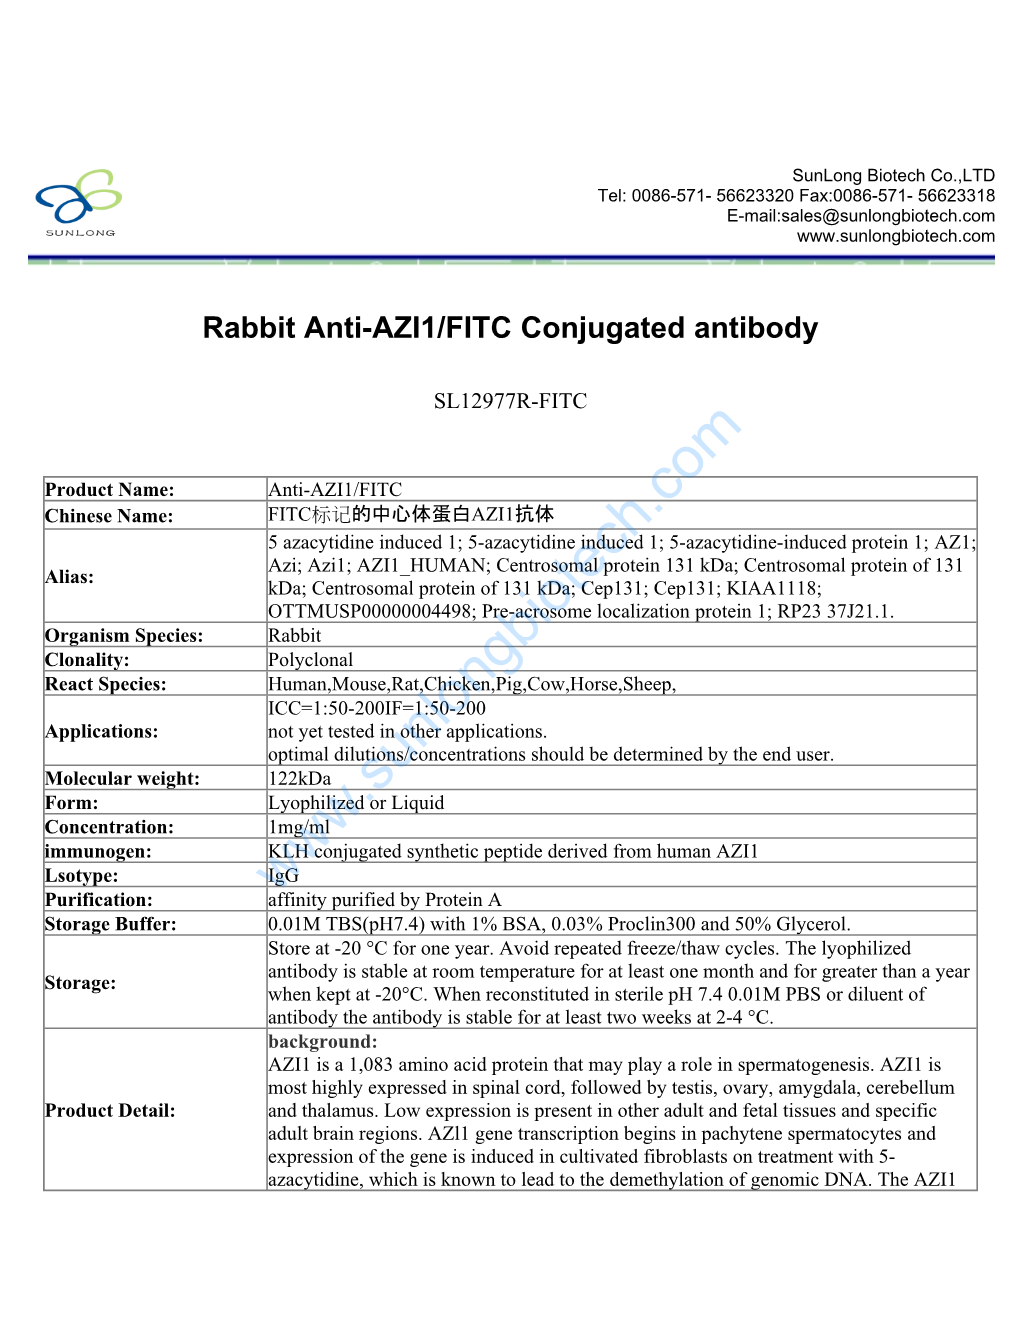 Rabbit Anti-AZI1/FITC Conjugated Antibody-SL12977R-FITC